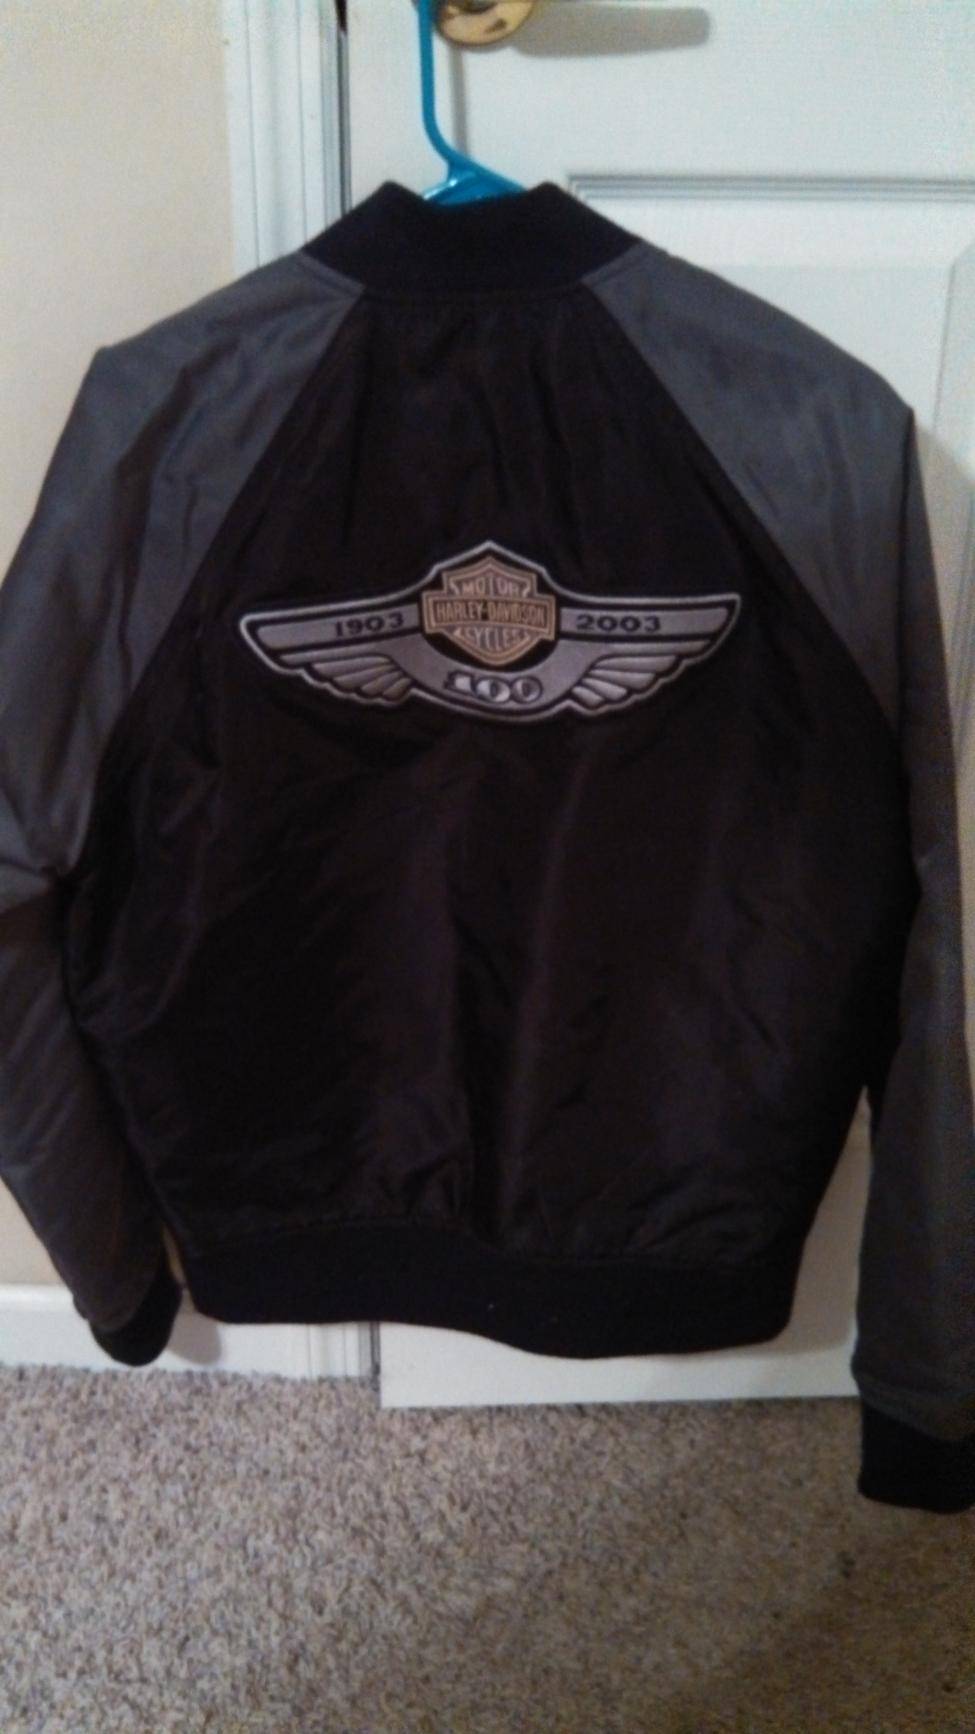 Harley Davidson 100th anniversary nylon jacket - Harley Davidson Forums